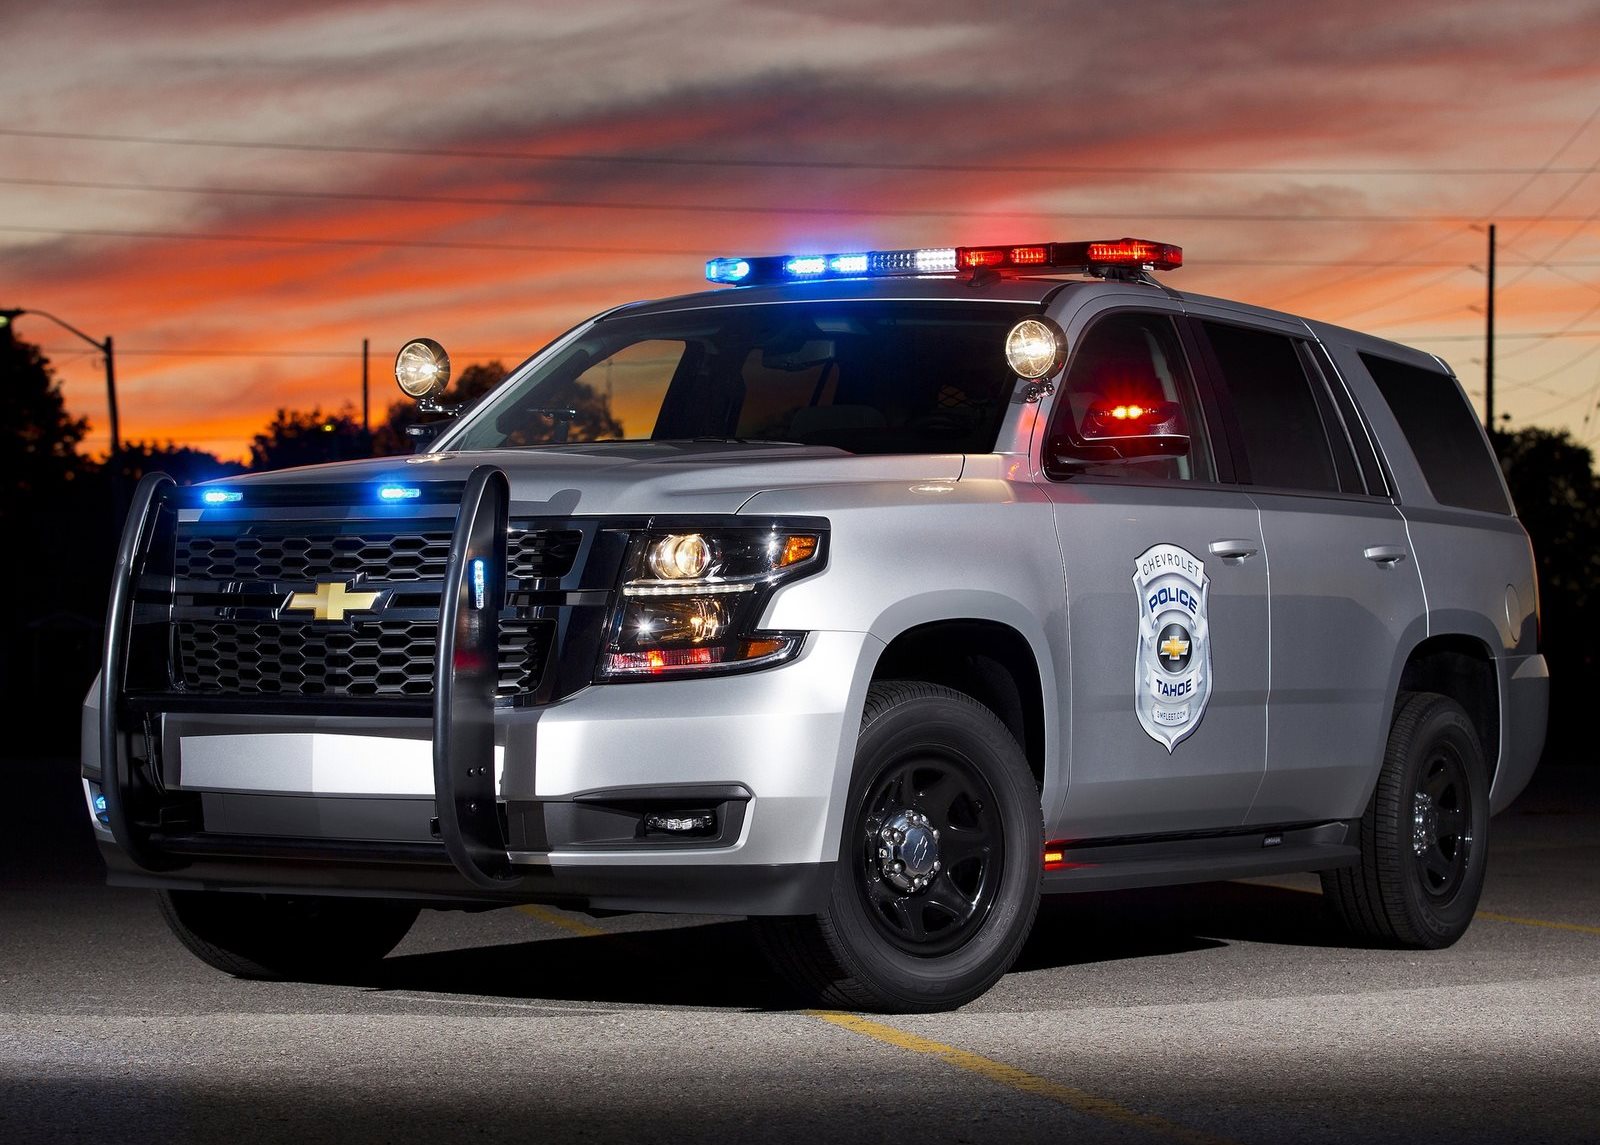 Official Image of 2015 Tahoe 'Police Patrol Vehicle'